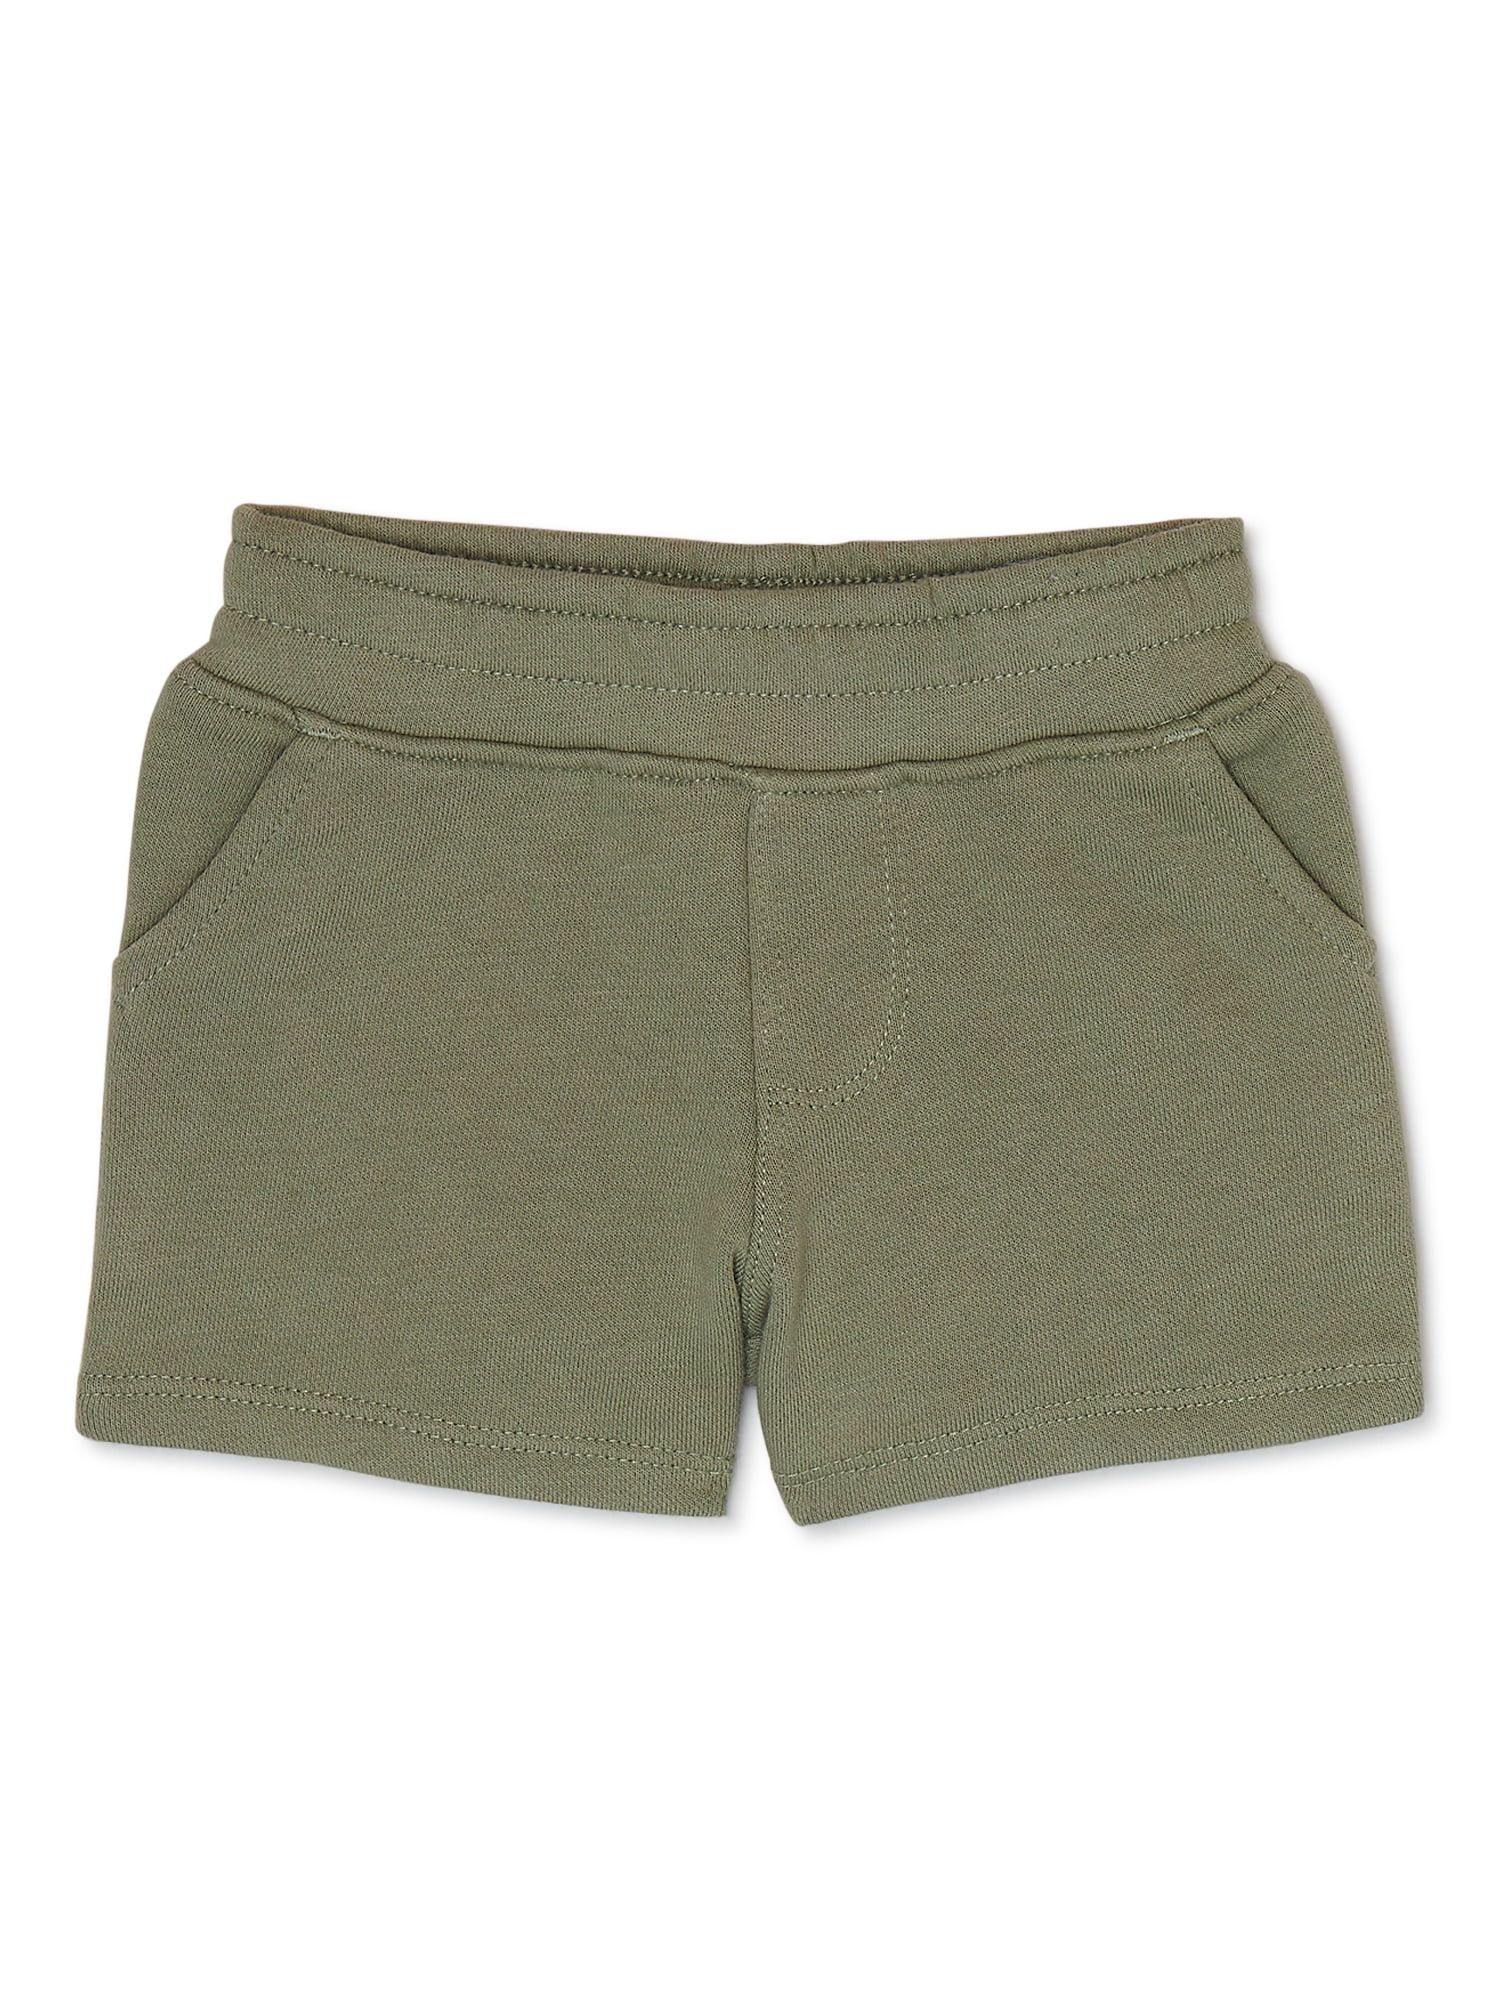 Garanimals Baby Boy Solid French Terry Shorts, Sizes 0-24 Months | Walmart (US)